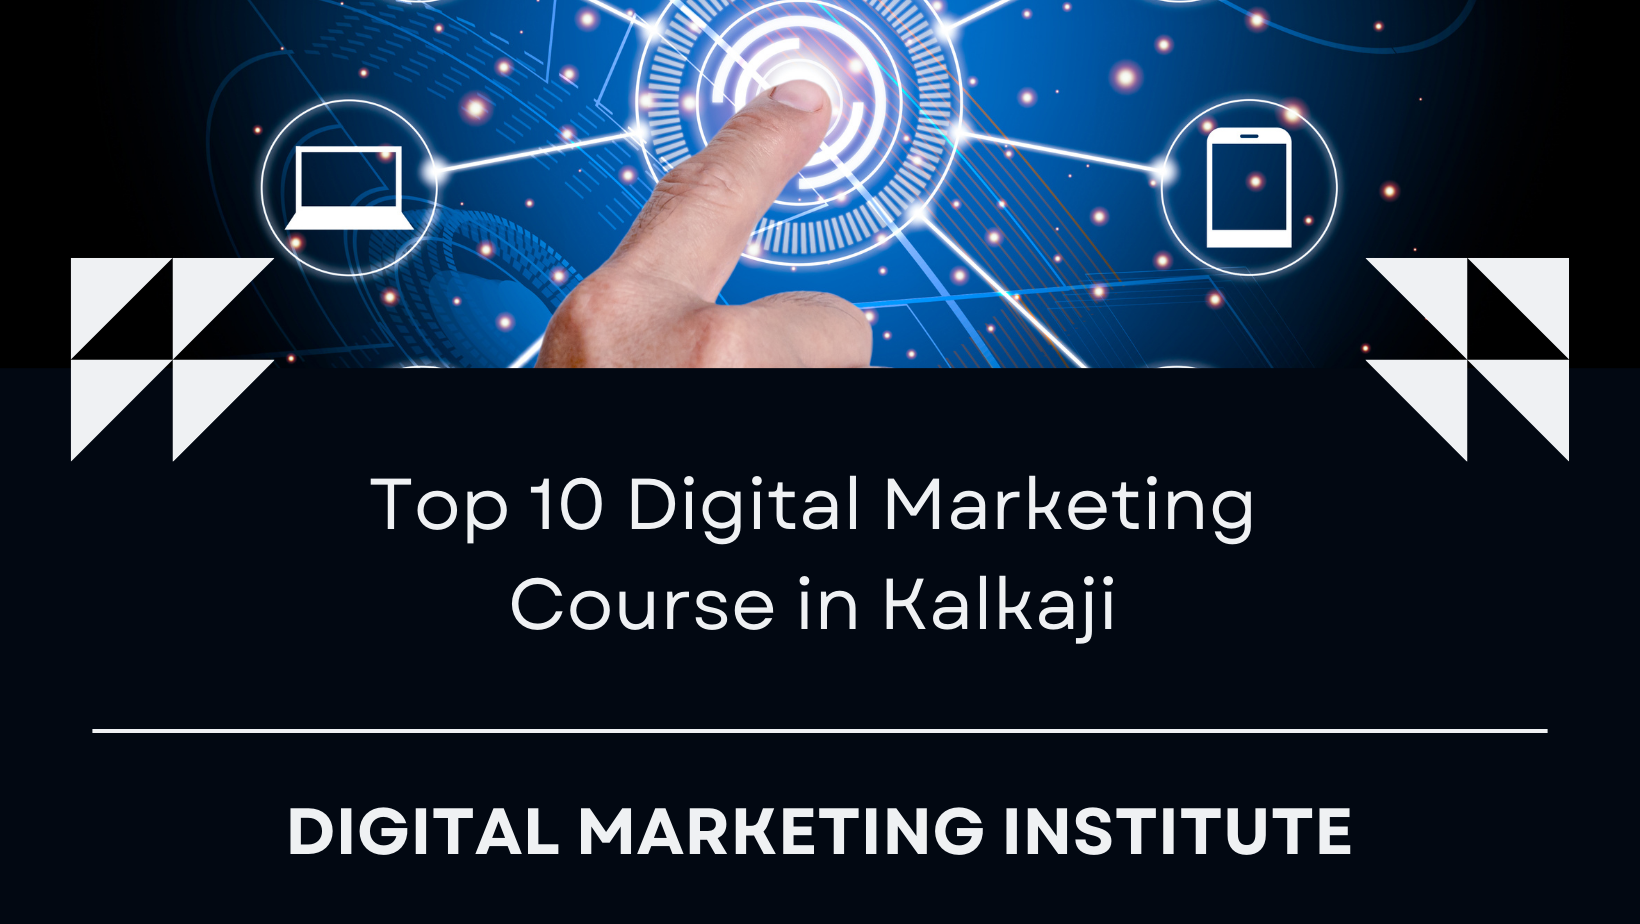 Top 10 Digital Marketing Course in Kalkaji